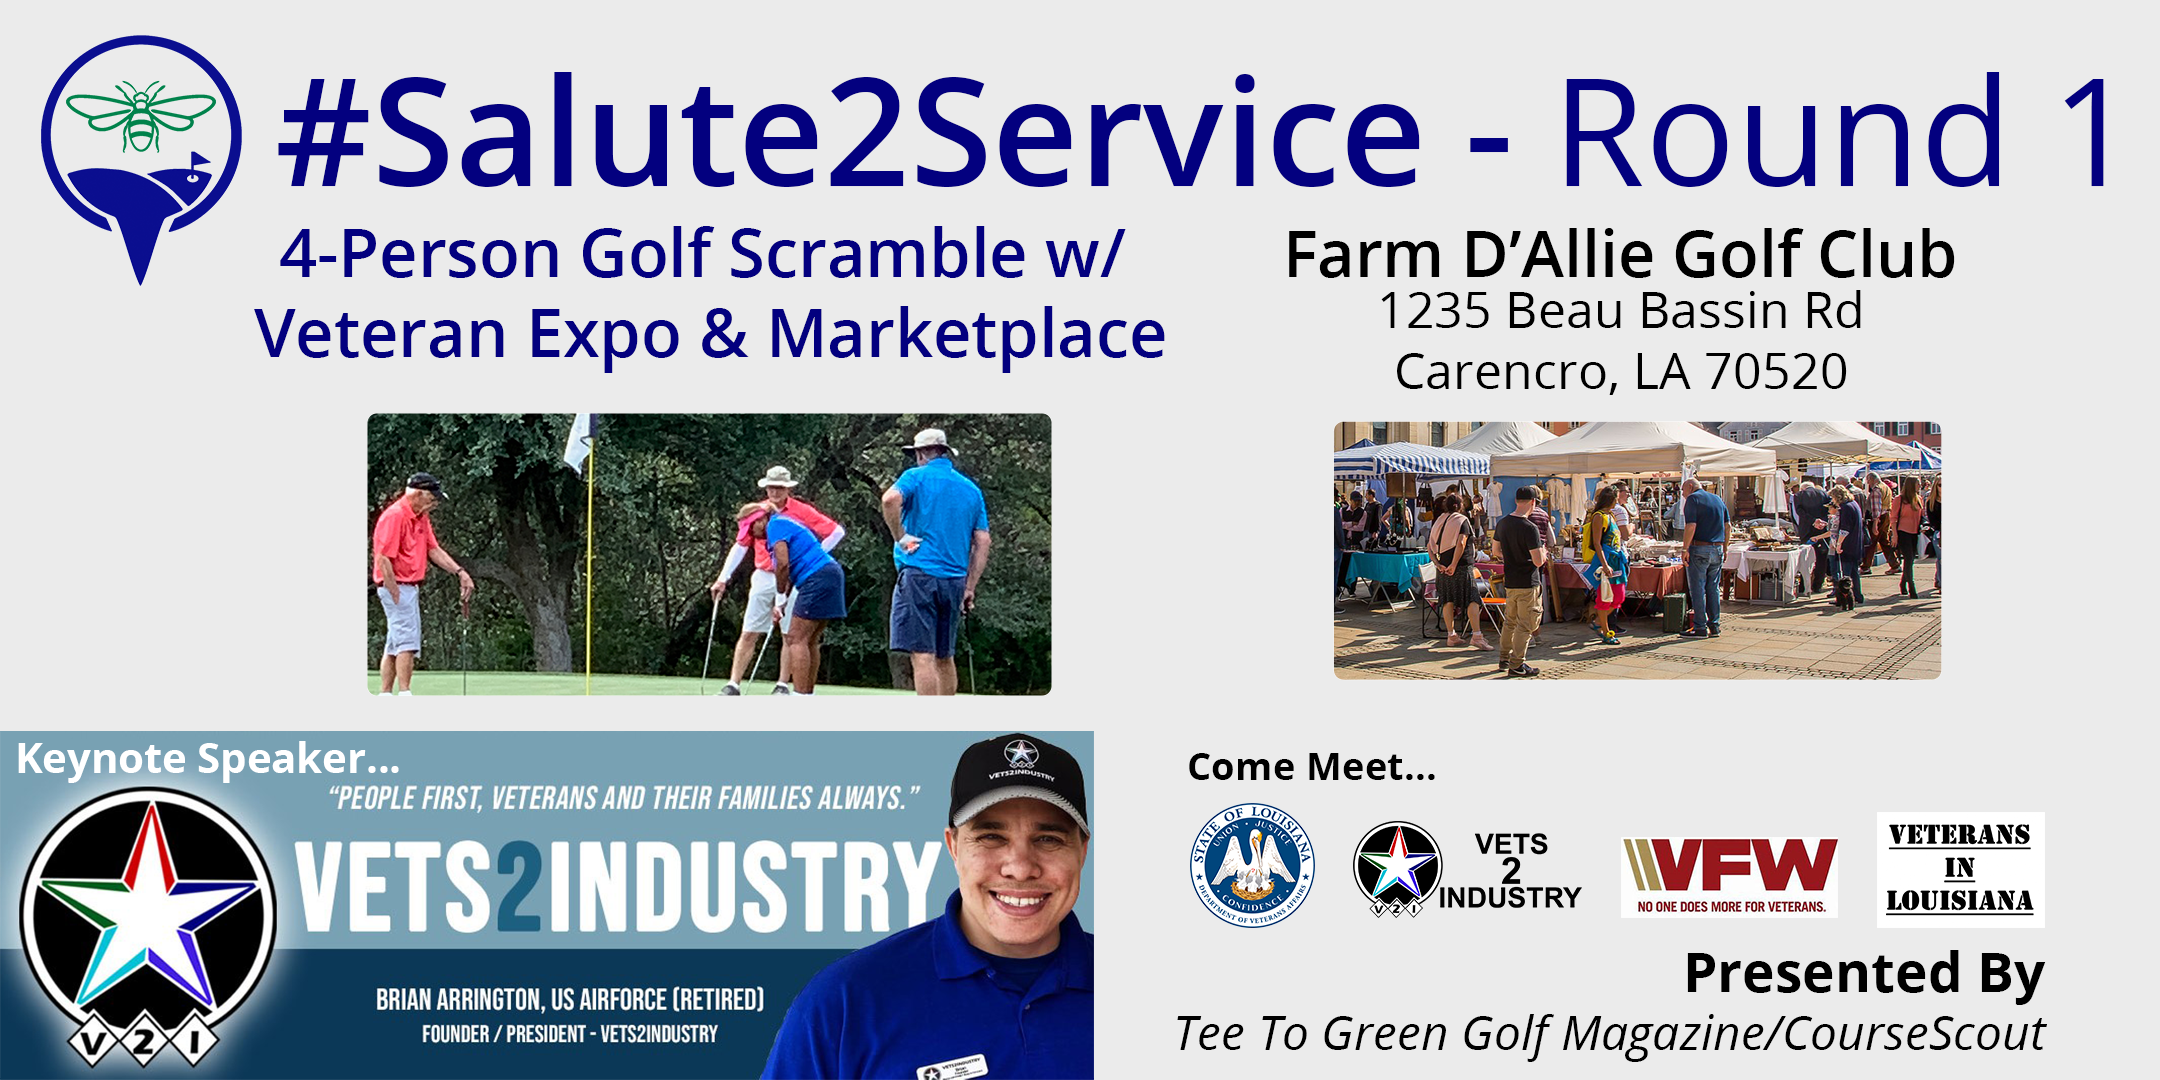 #Salute2Service 4-Person Golf Scramble w/ FREE Expo & Marketplace - Round 1